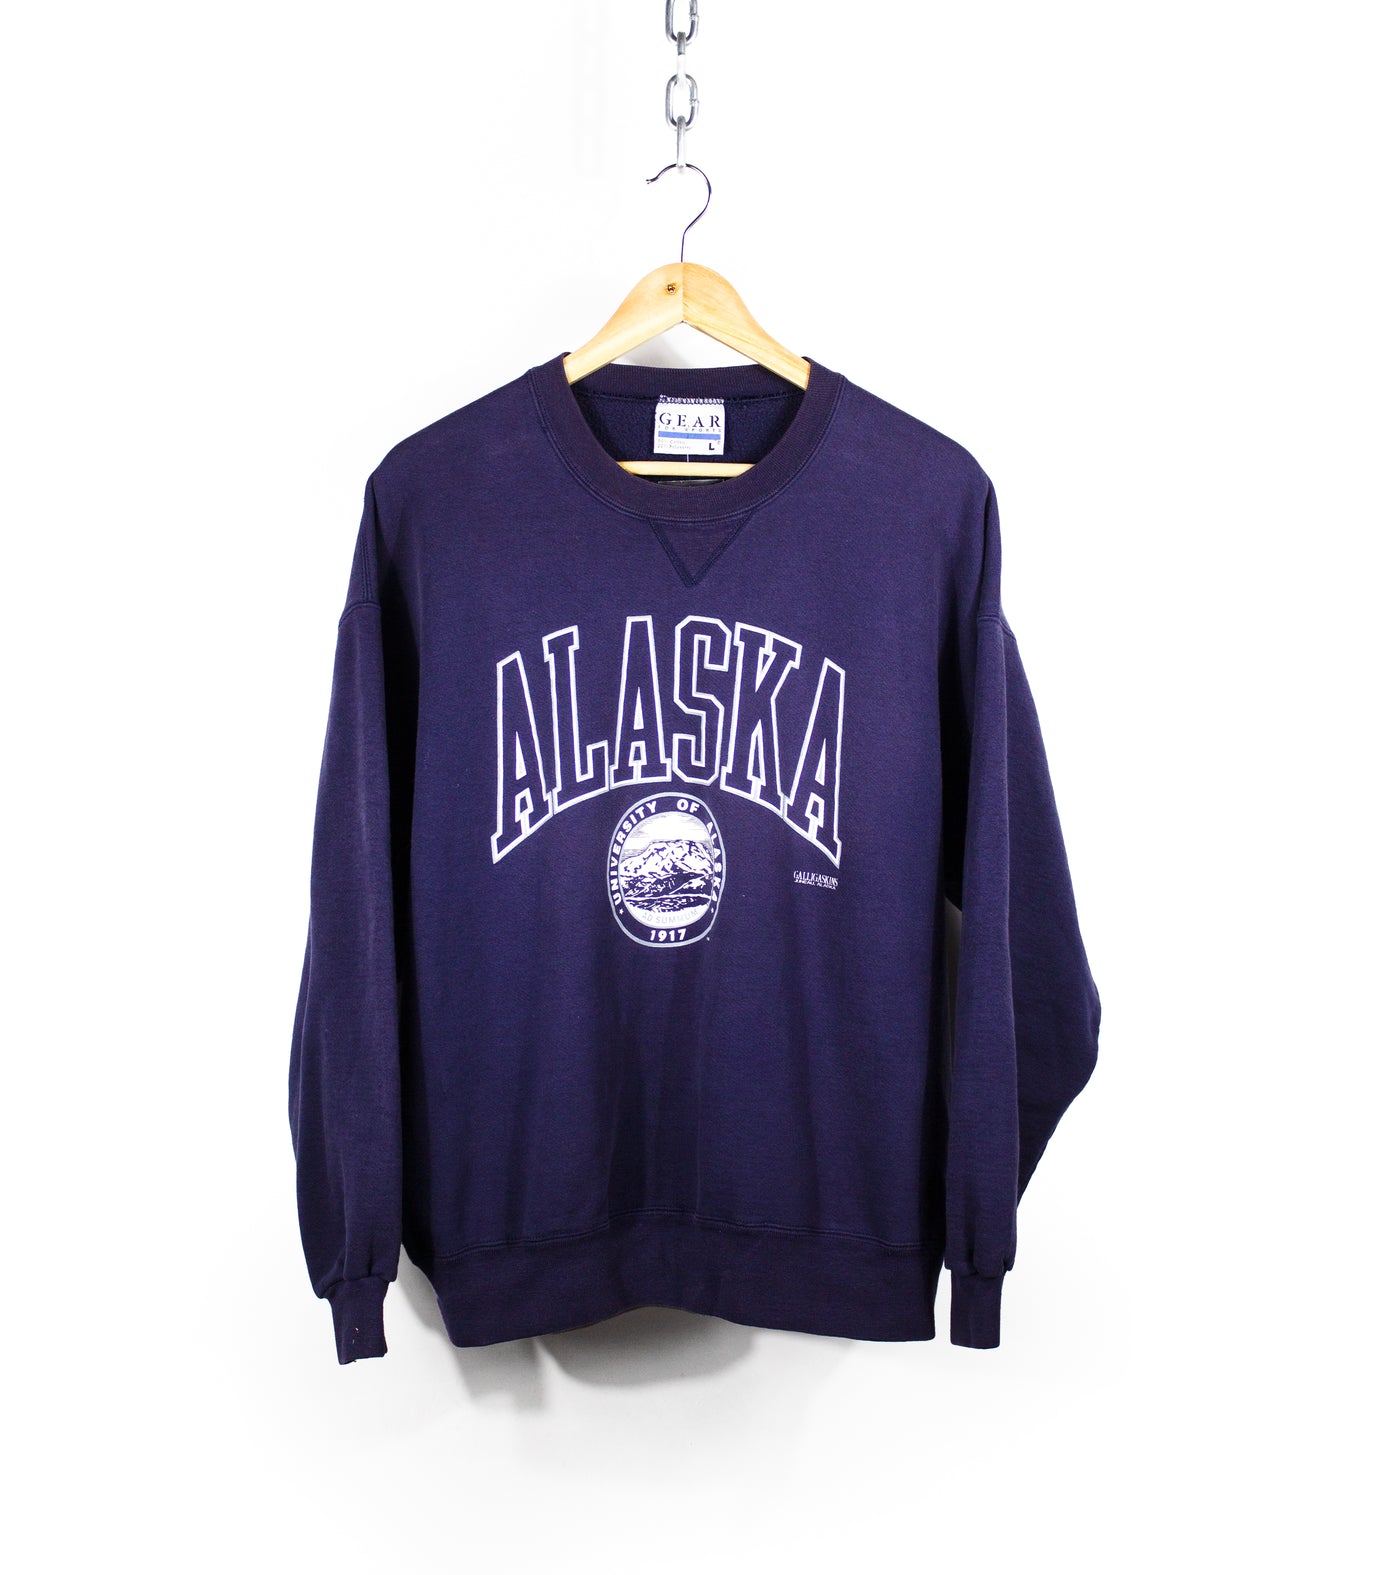 Vintage 90s University of Alaska Crewneck